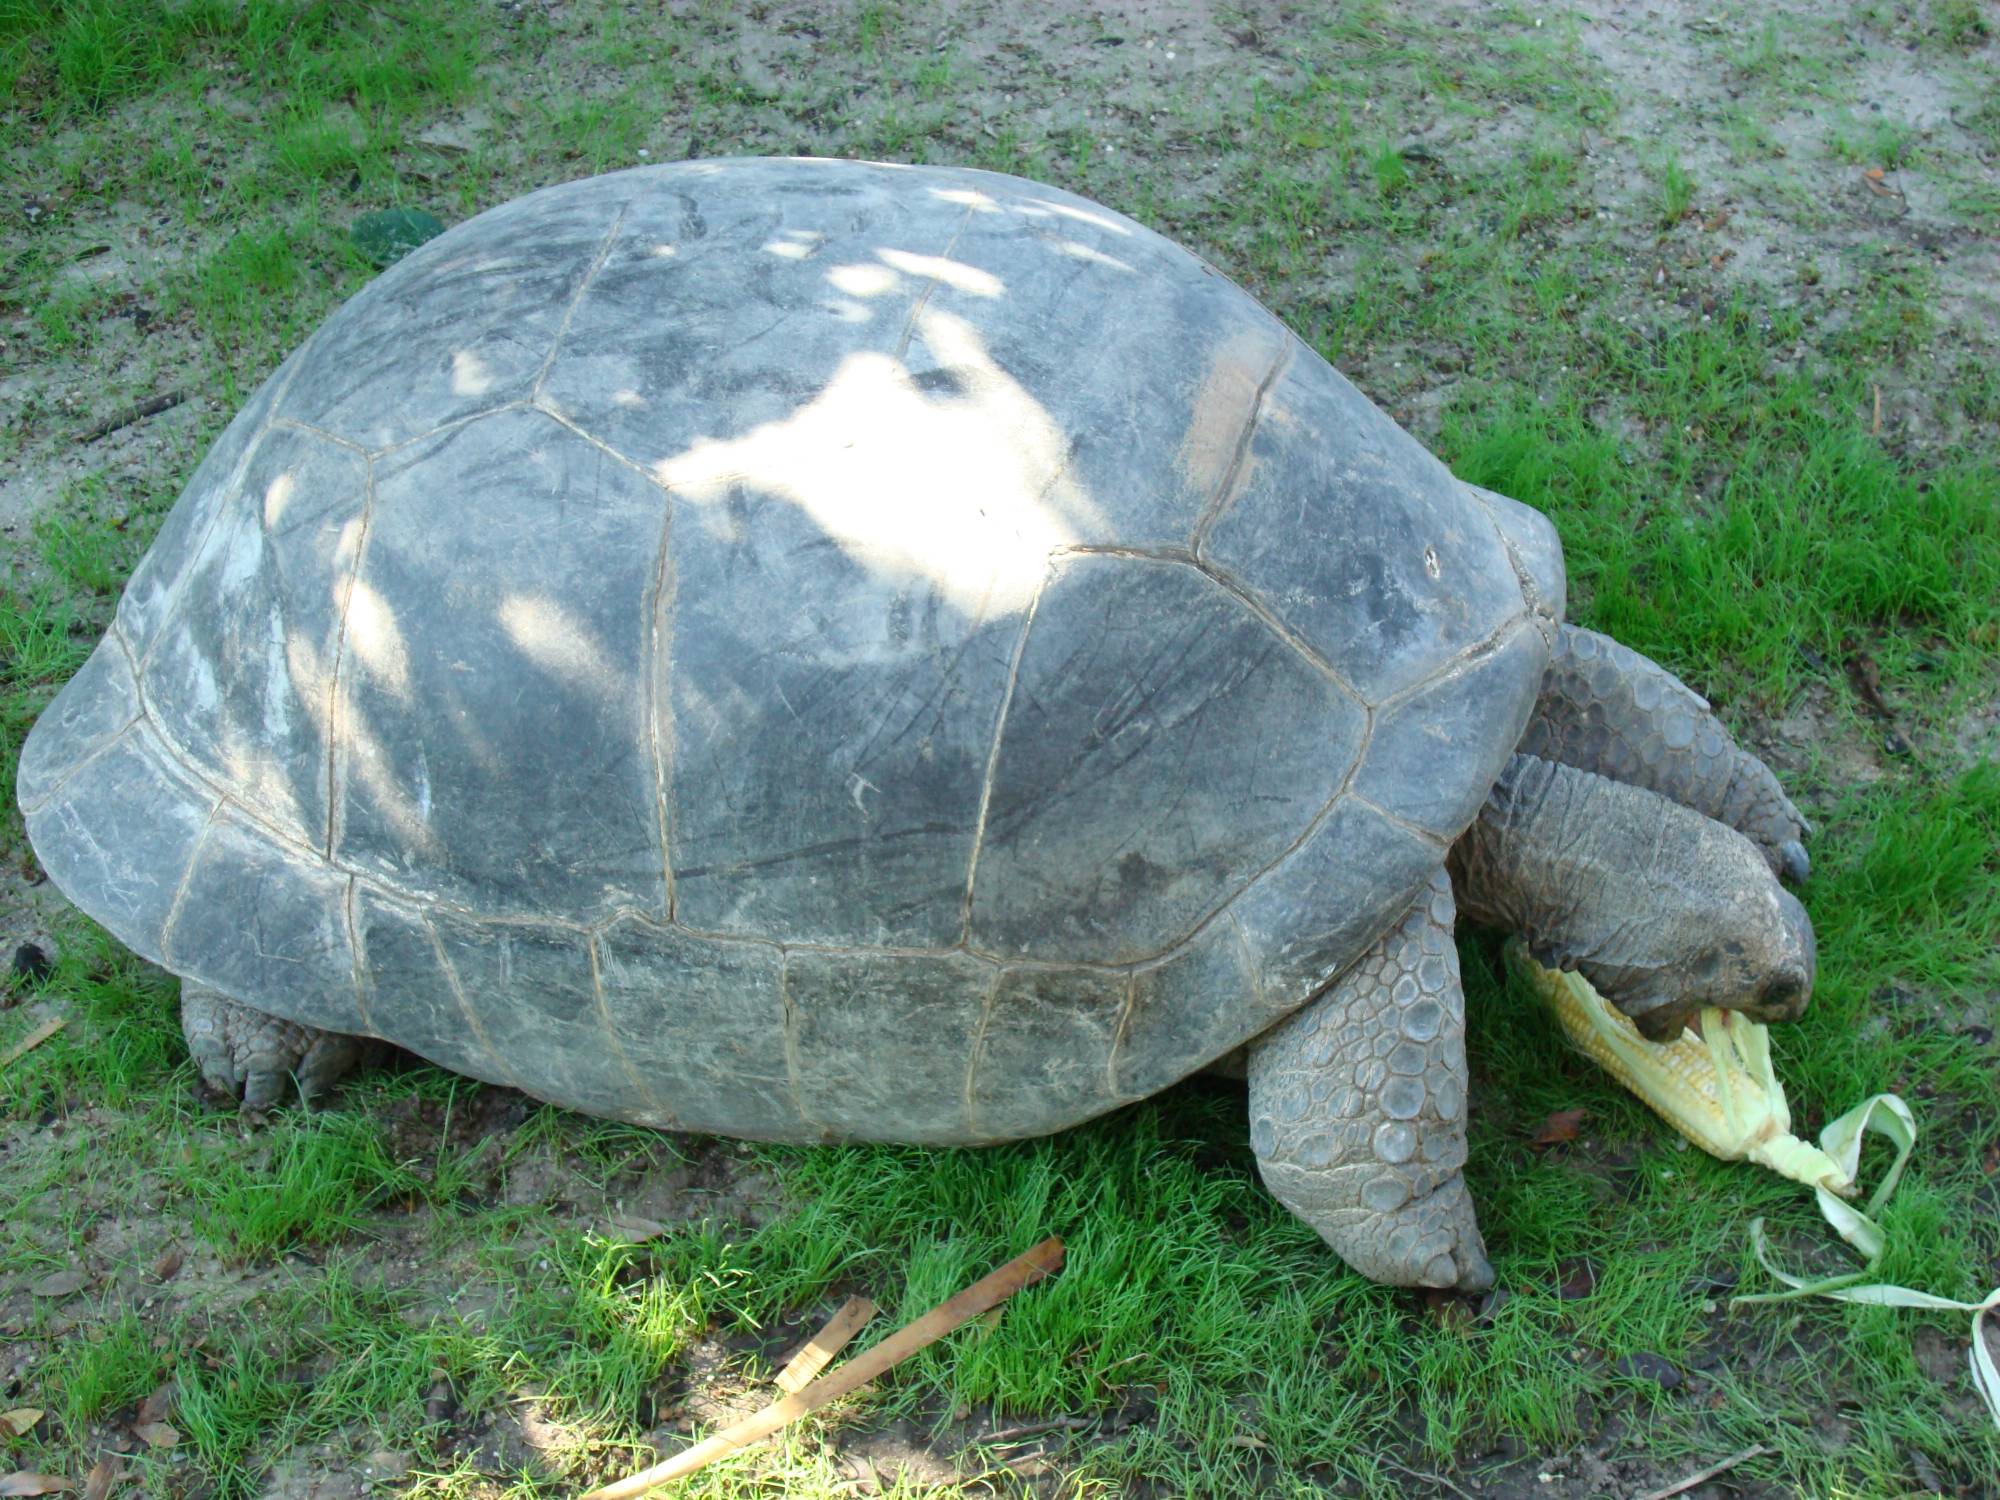 Busch Gardens Tampa - giant tortoises